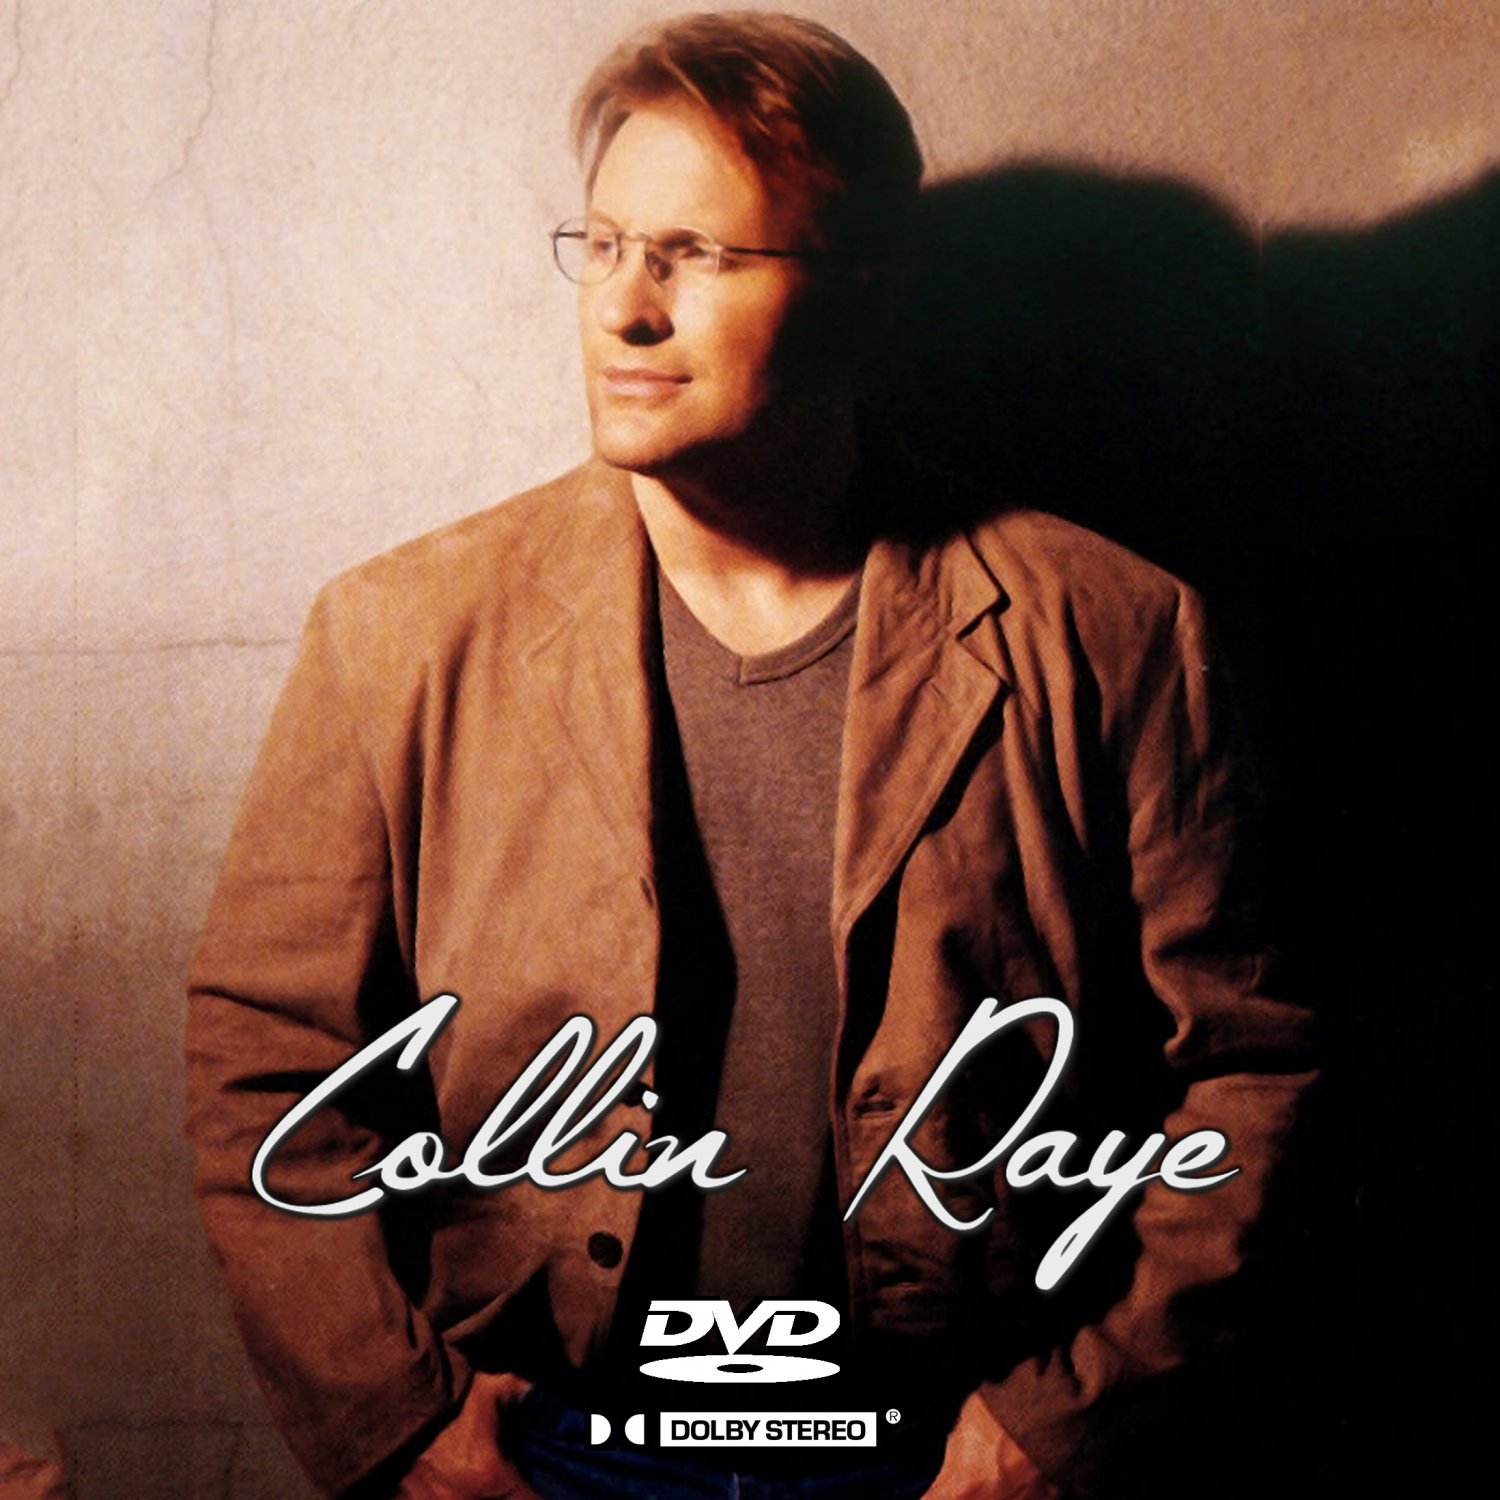 Collin Raye Music Videos Collection 1 Dvd 26music Videos